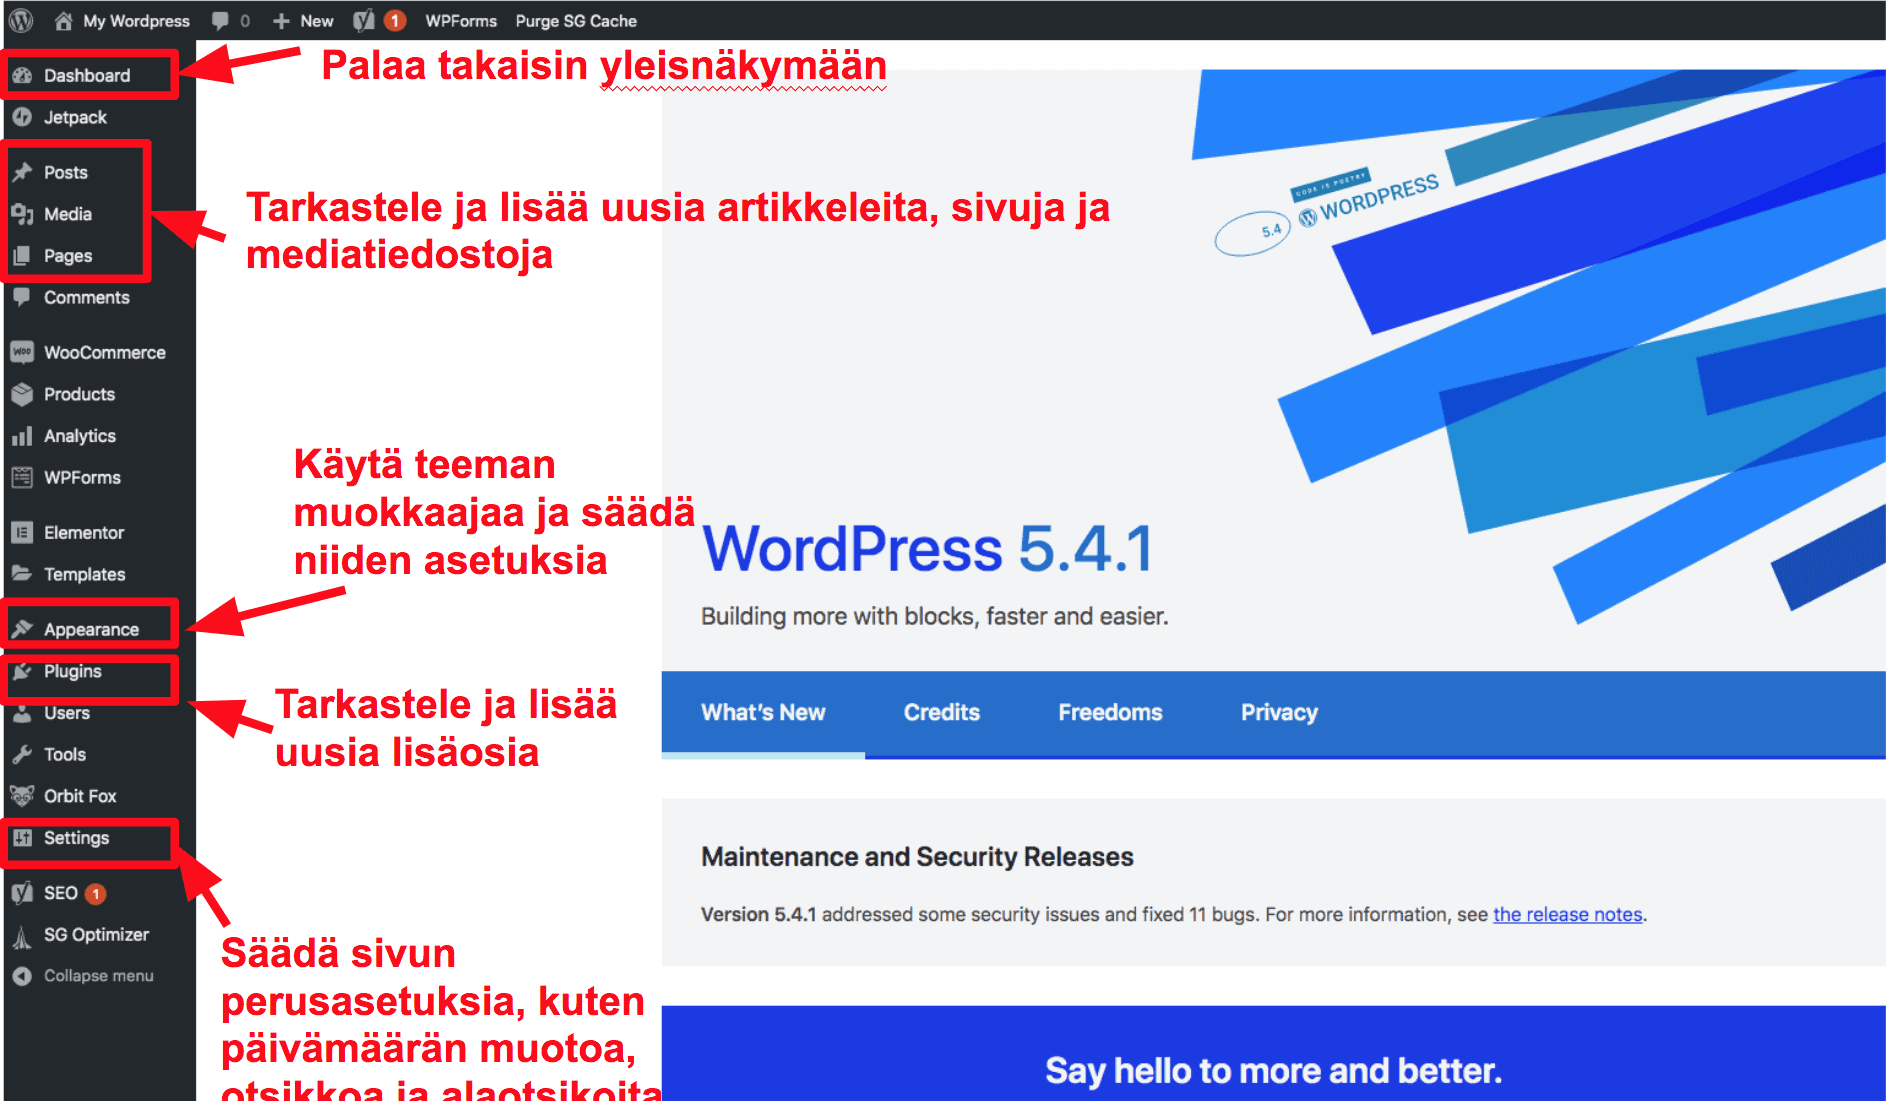 The WordPress dashboard FL16